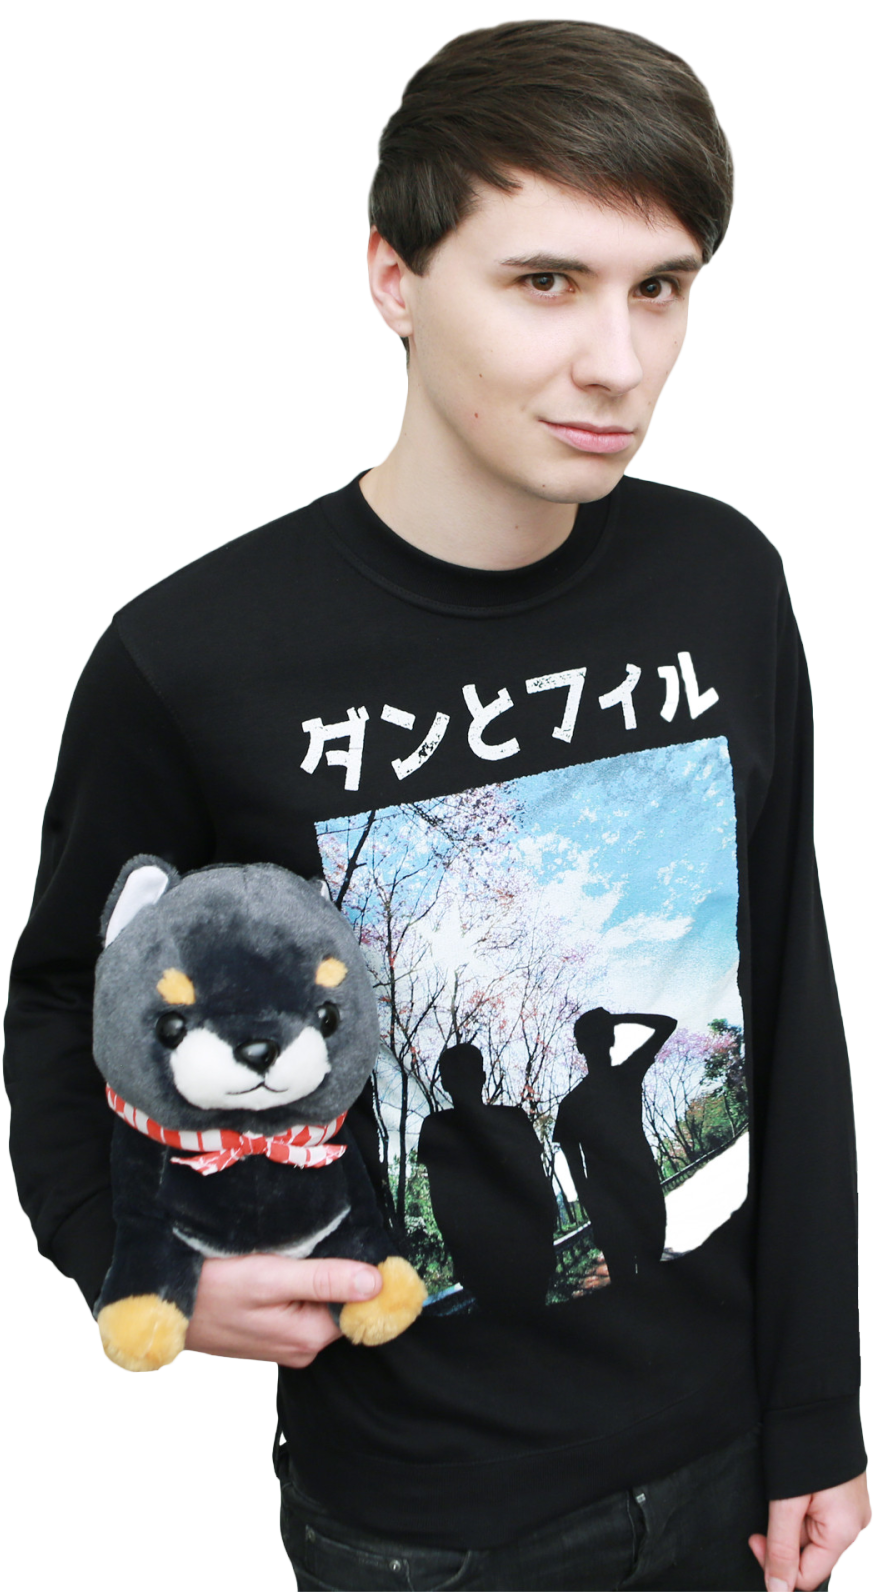 Man Holding Plush Toy With Japanese Text Sweatshirt